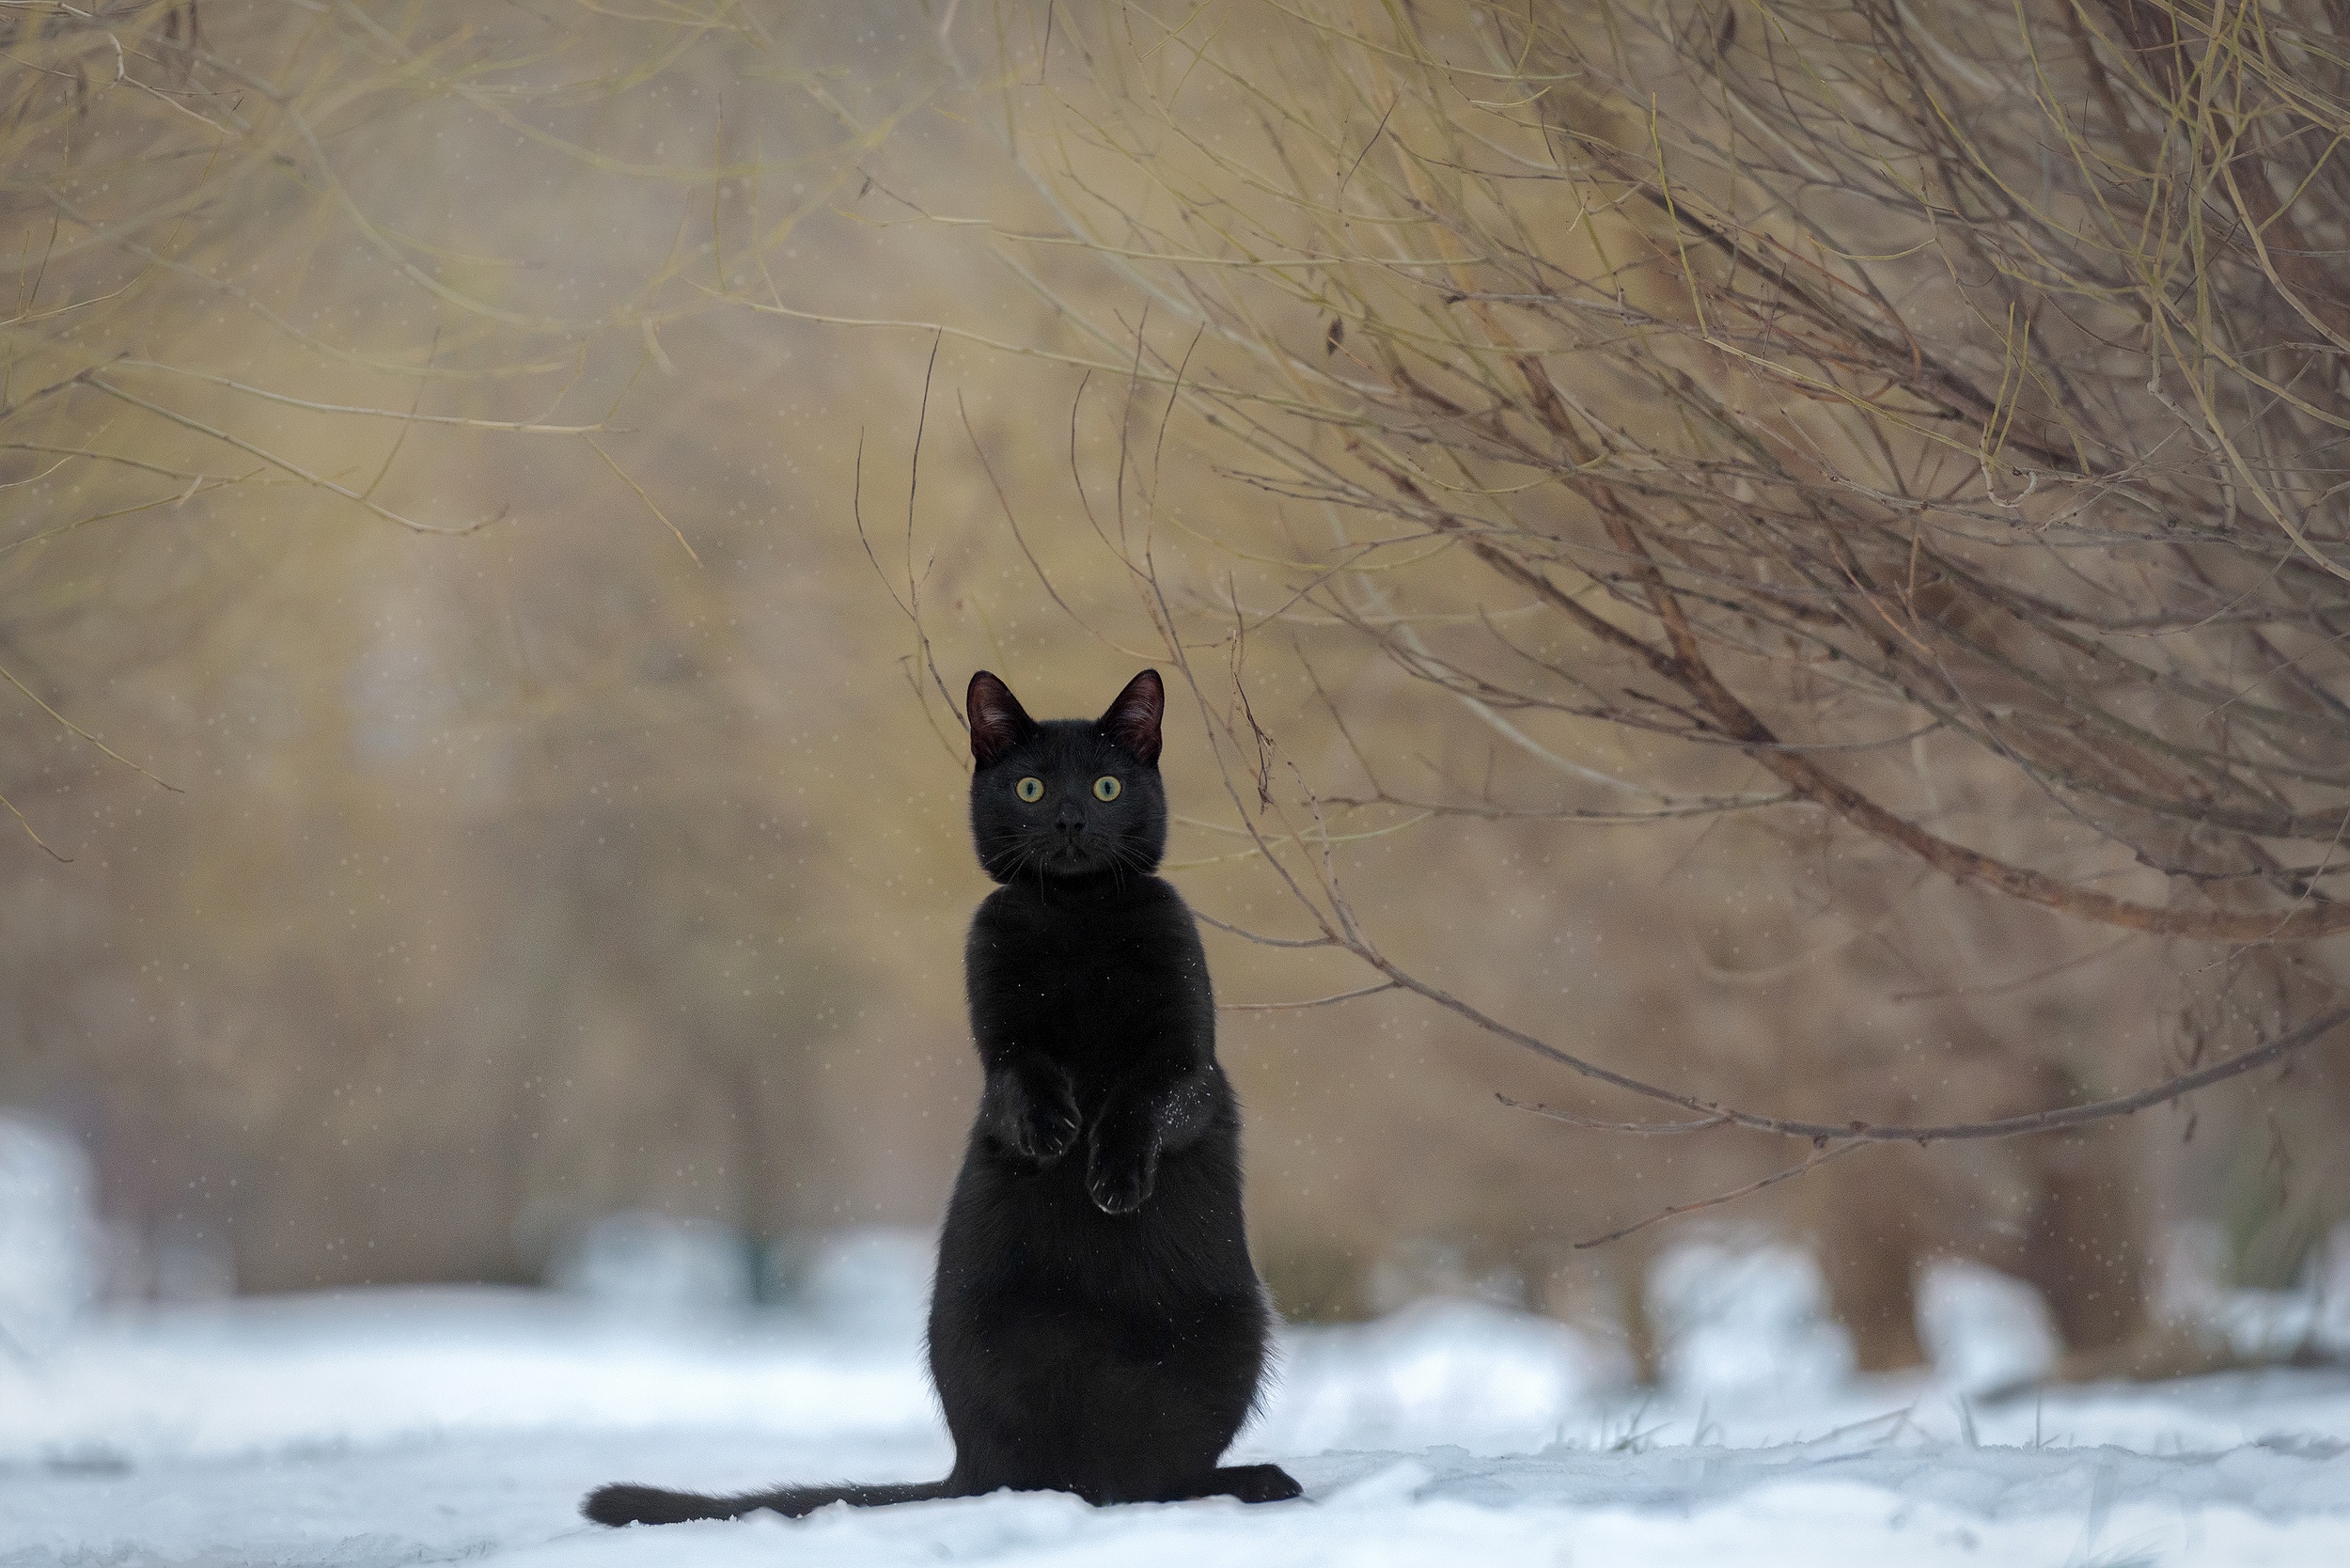 Animals Cats Mammals Outdoors Black Cats Snow Winter Nature 2500x1668